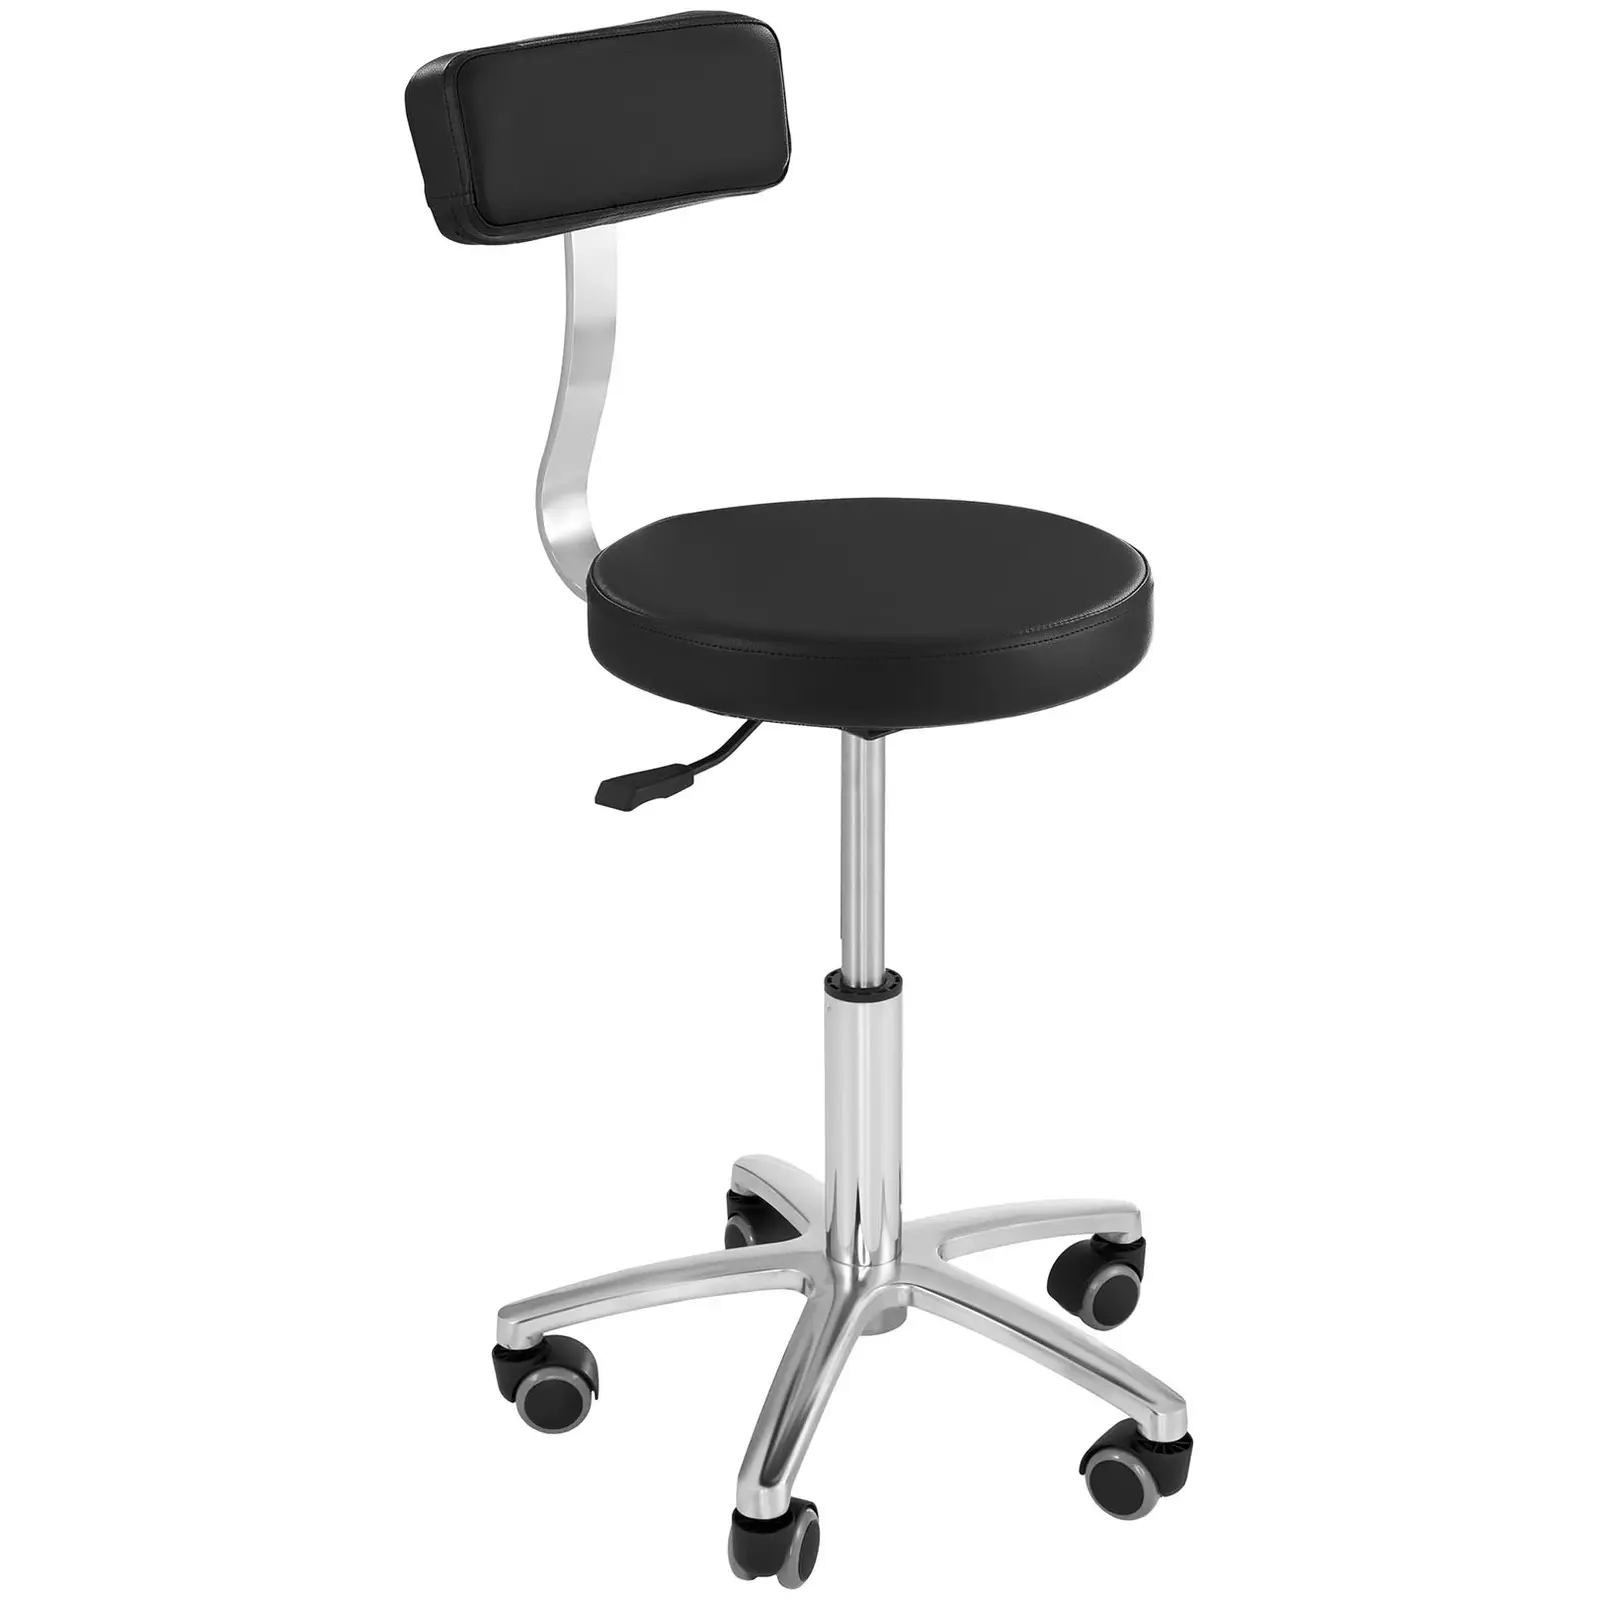 Hairdresser's chair - 445-580 mm - 150 kg - Black